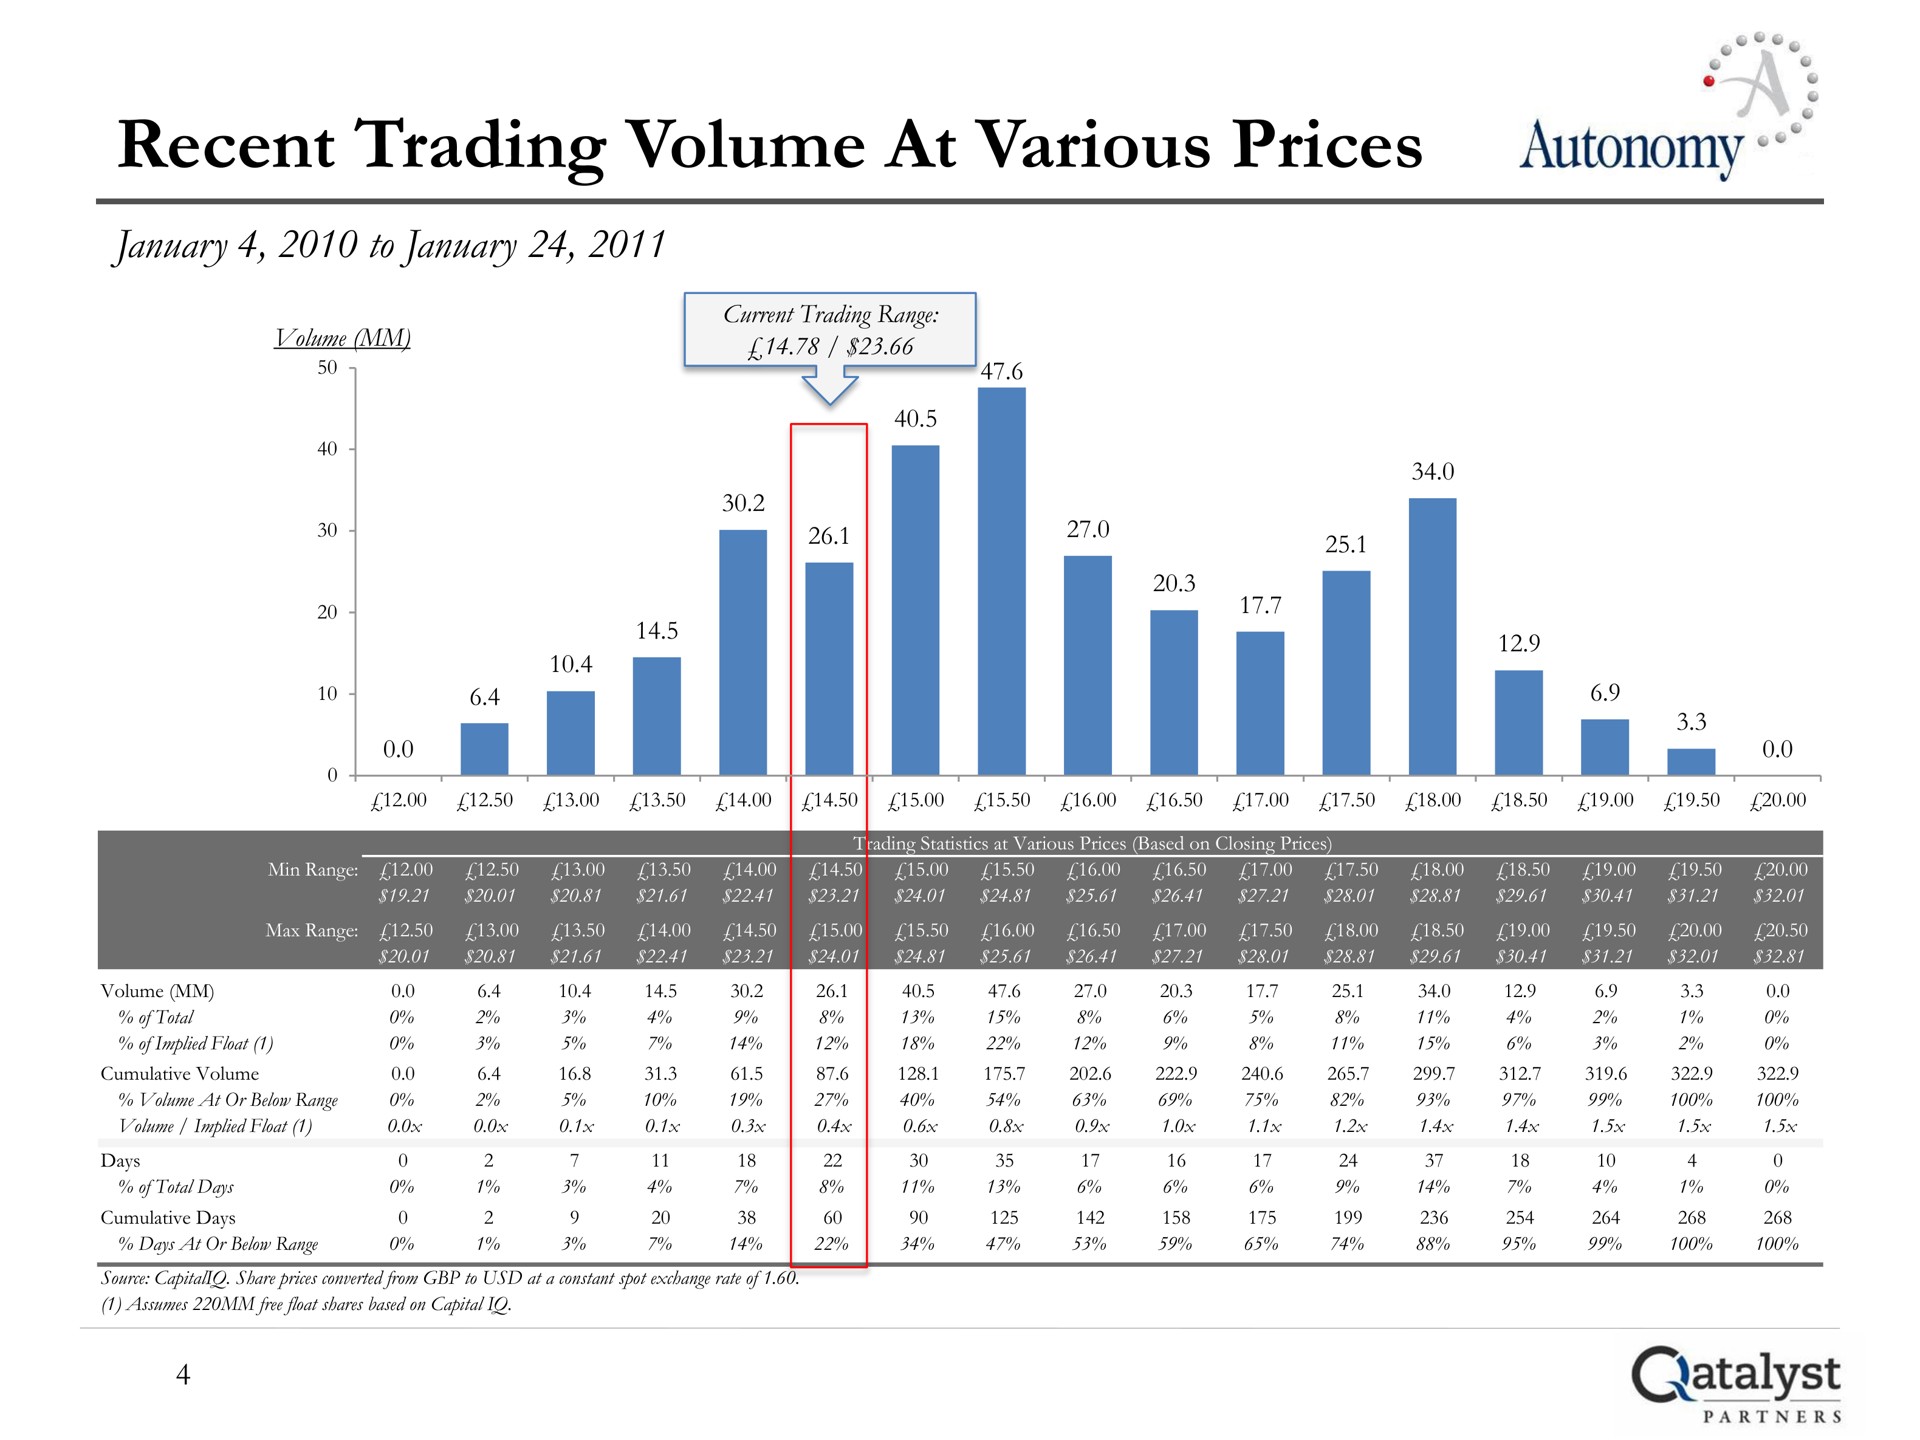 recent trading volume at various prices to autonomy | Qatalyst Partners